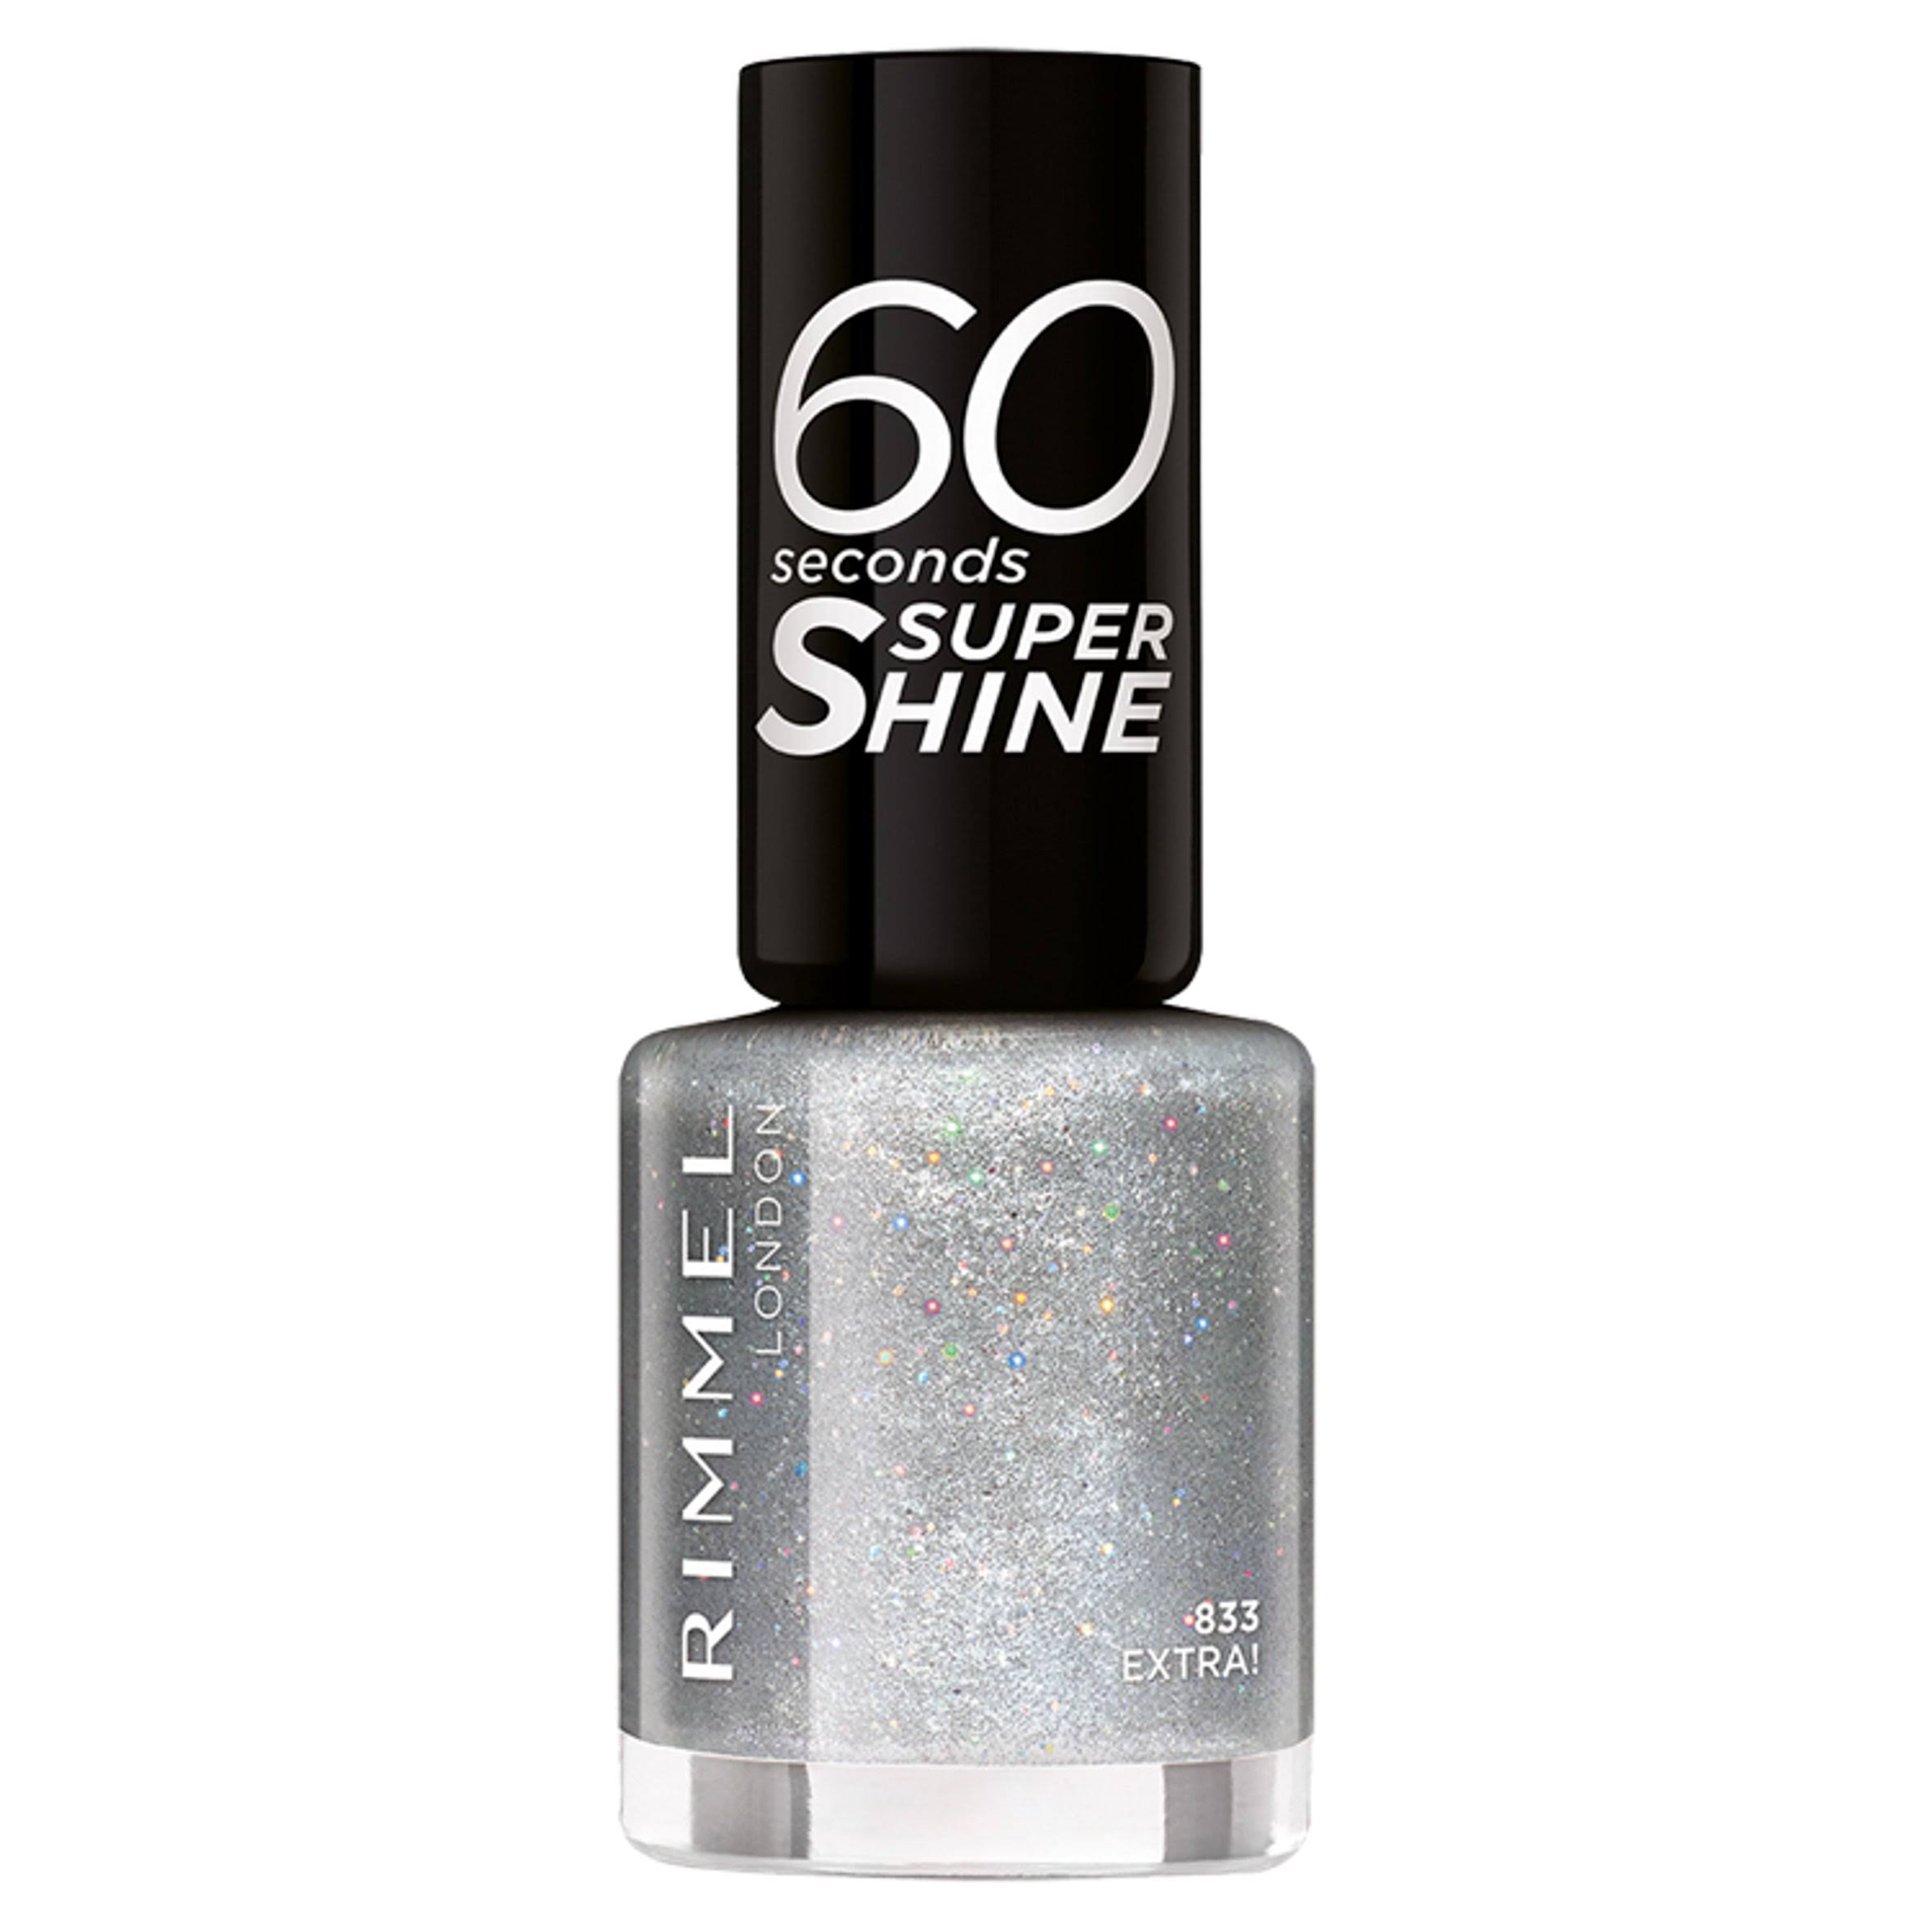 Rimmel 60 Seconds Glitter Nail Polish - Silver, 8ml